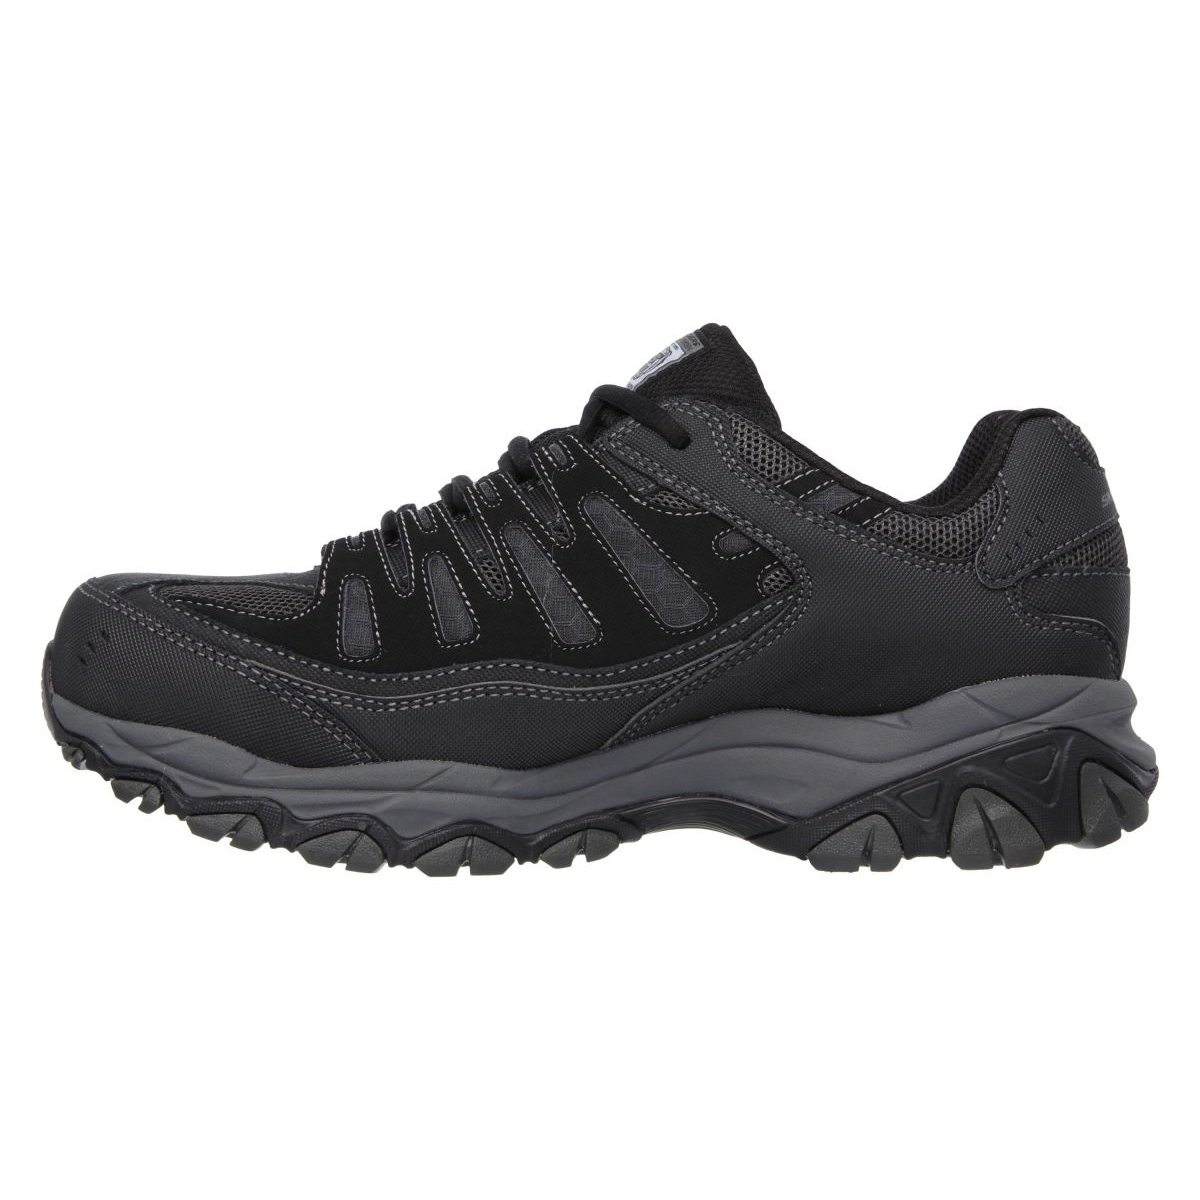 Skechers Men's Cankton-U Industrial Shoe 7 BLACK/CHARCOAL - BLACK/CHARCOAL, 7.5-W